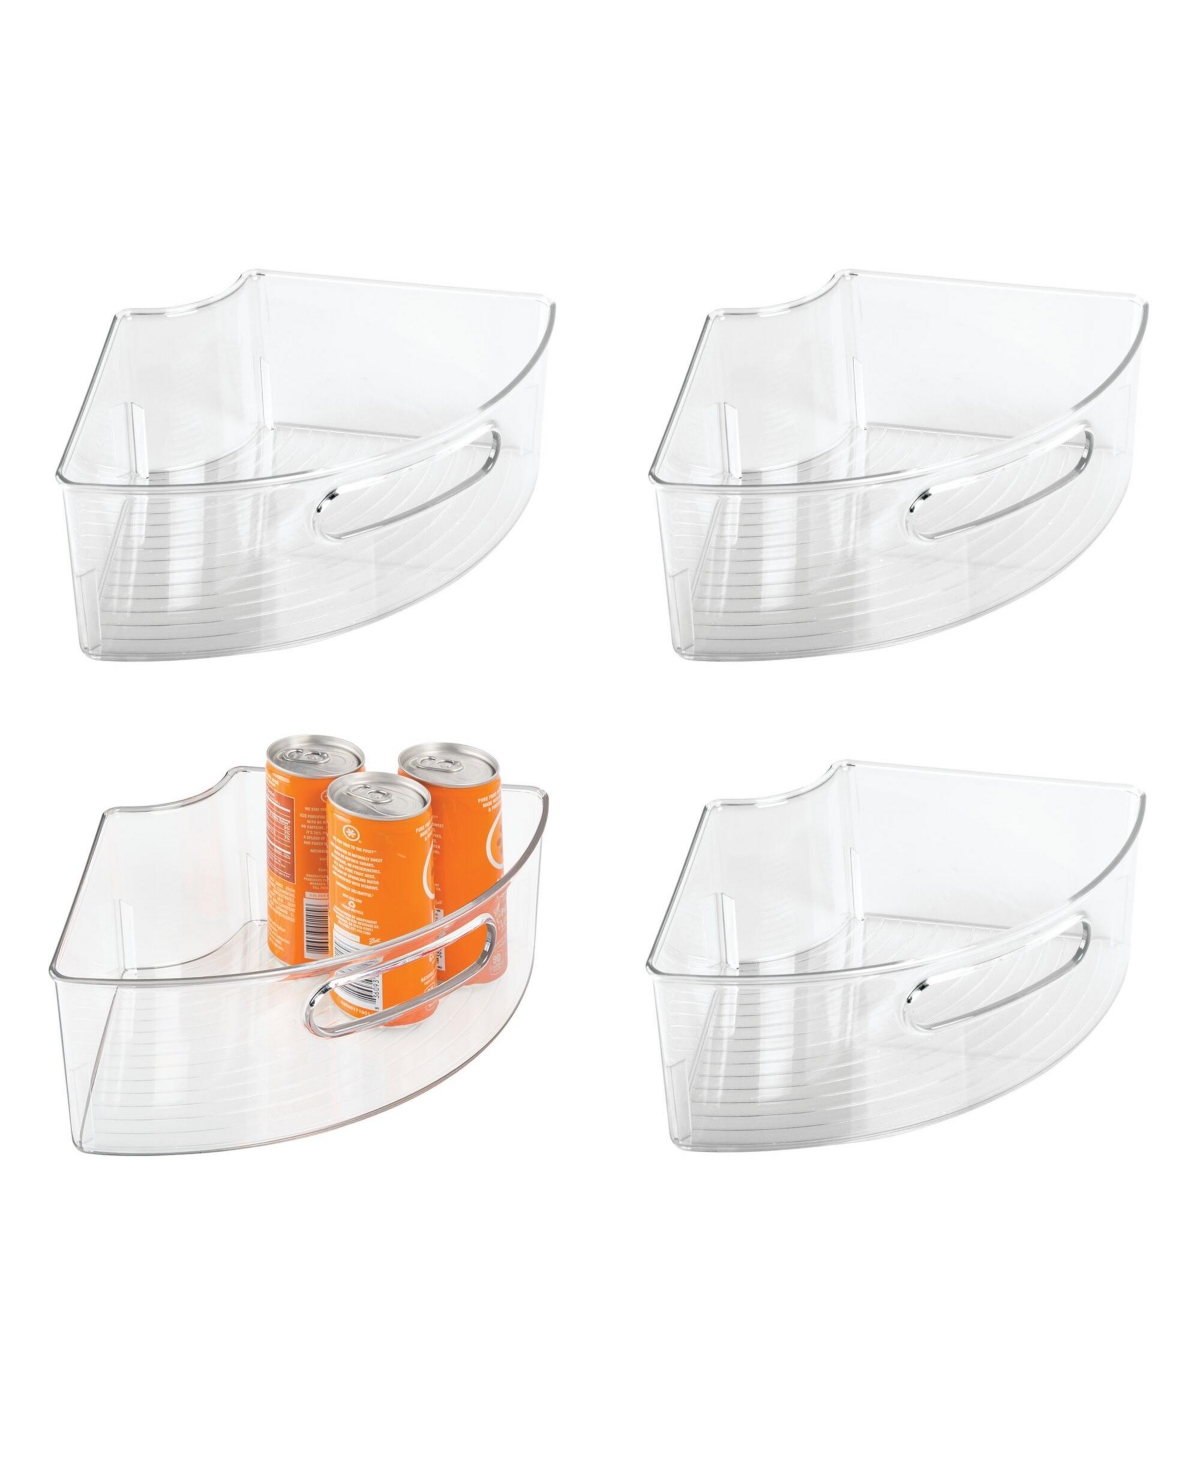 Idesign Plastic Lazy Susan Cabinet Storage Bin, Set Of 4 In No Color